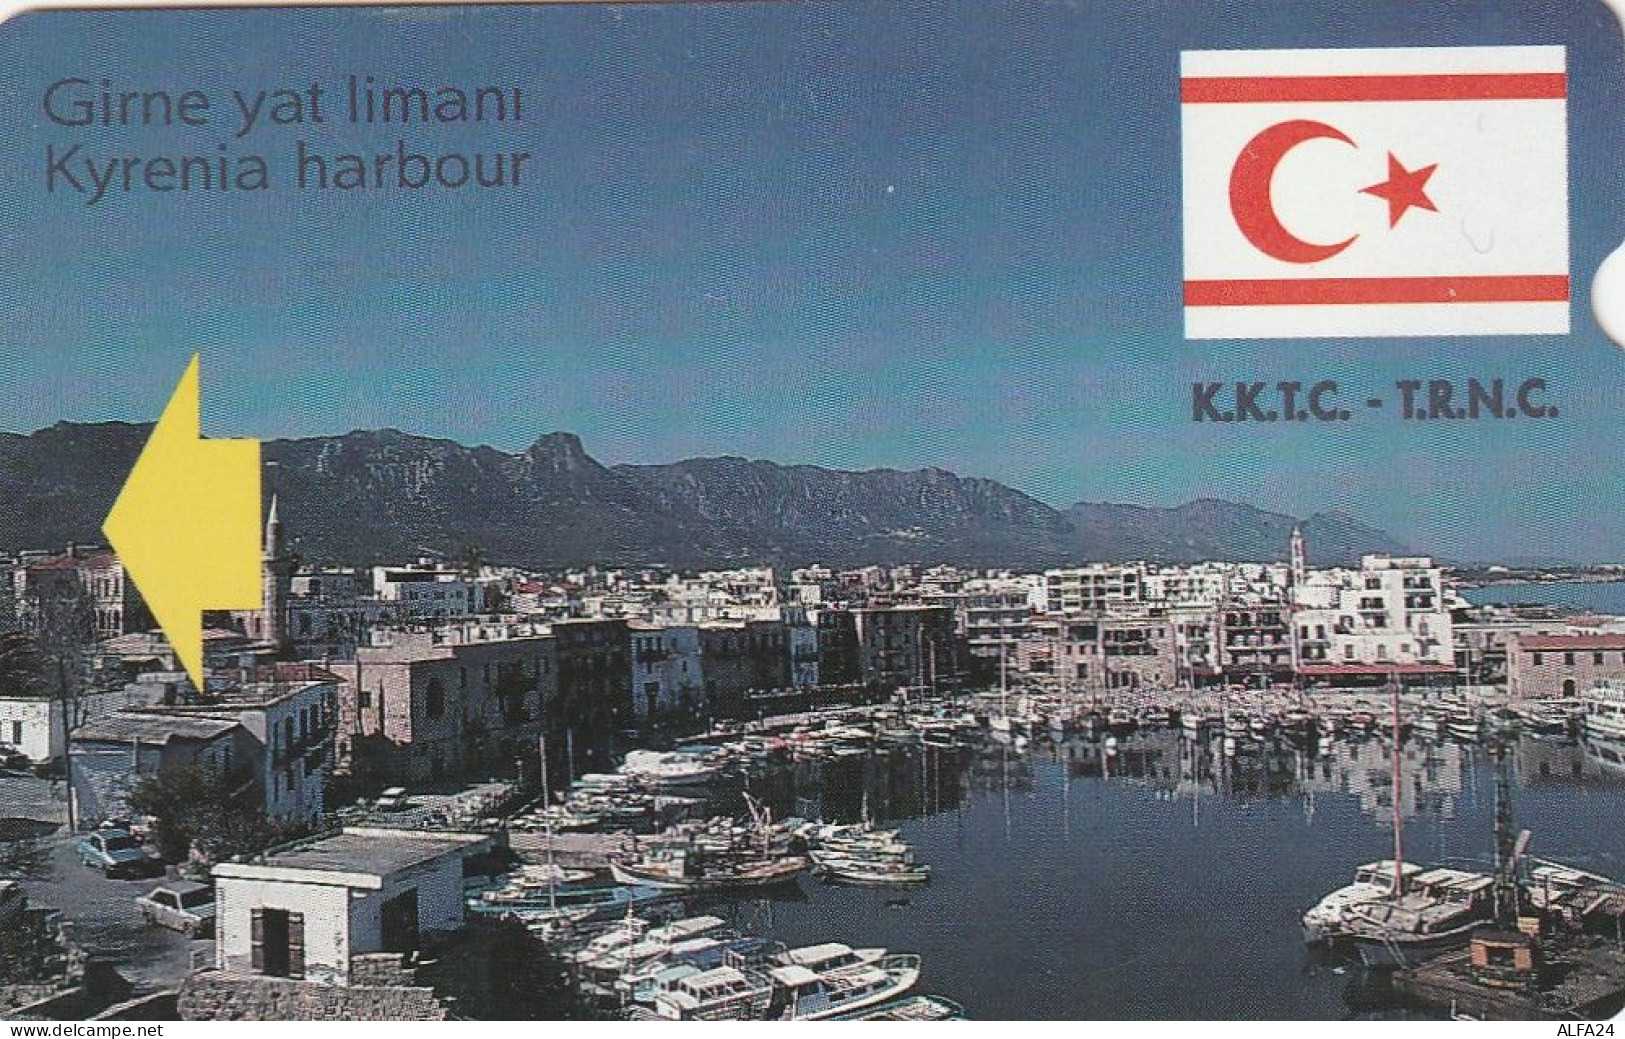 PHONE CARD CIPRO TURCA  (E83.7.5 - Chipre